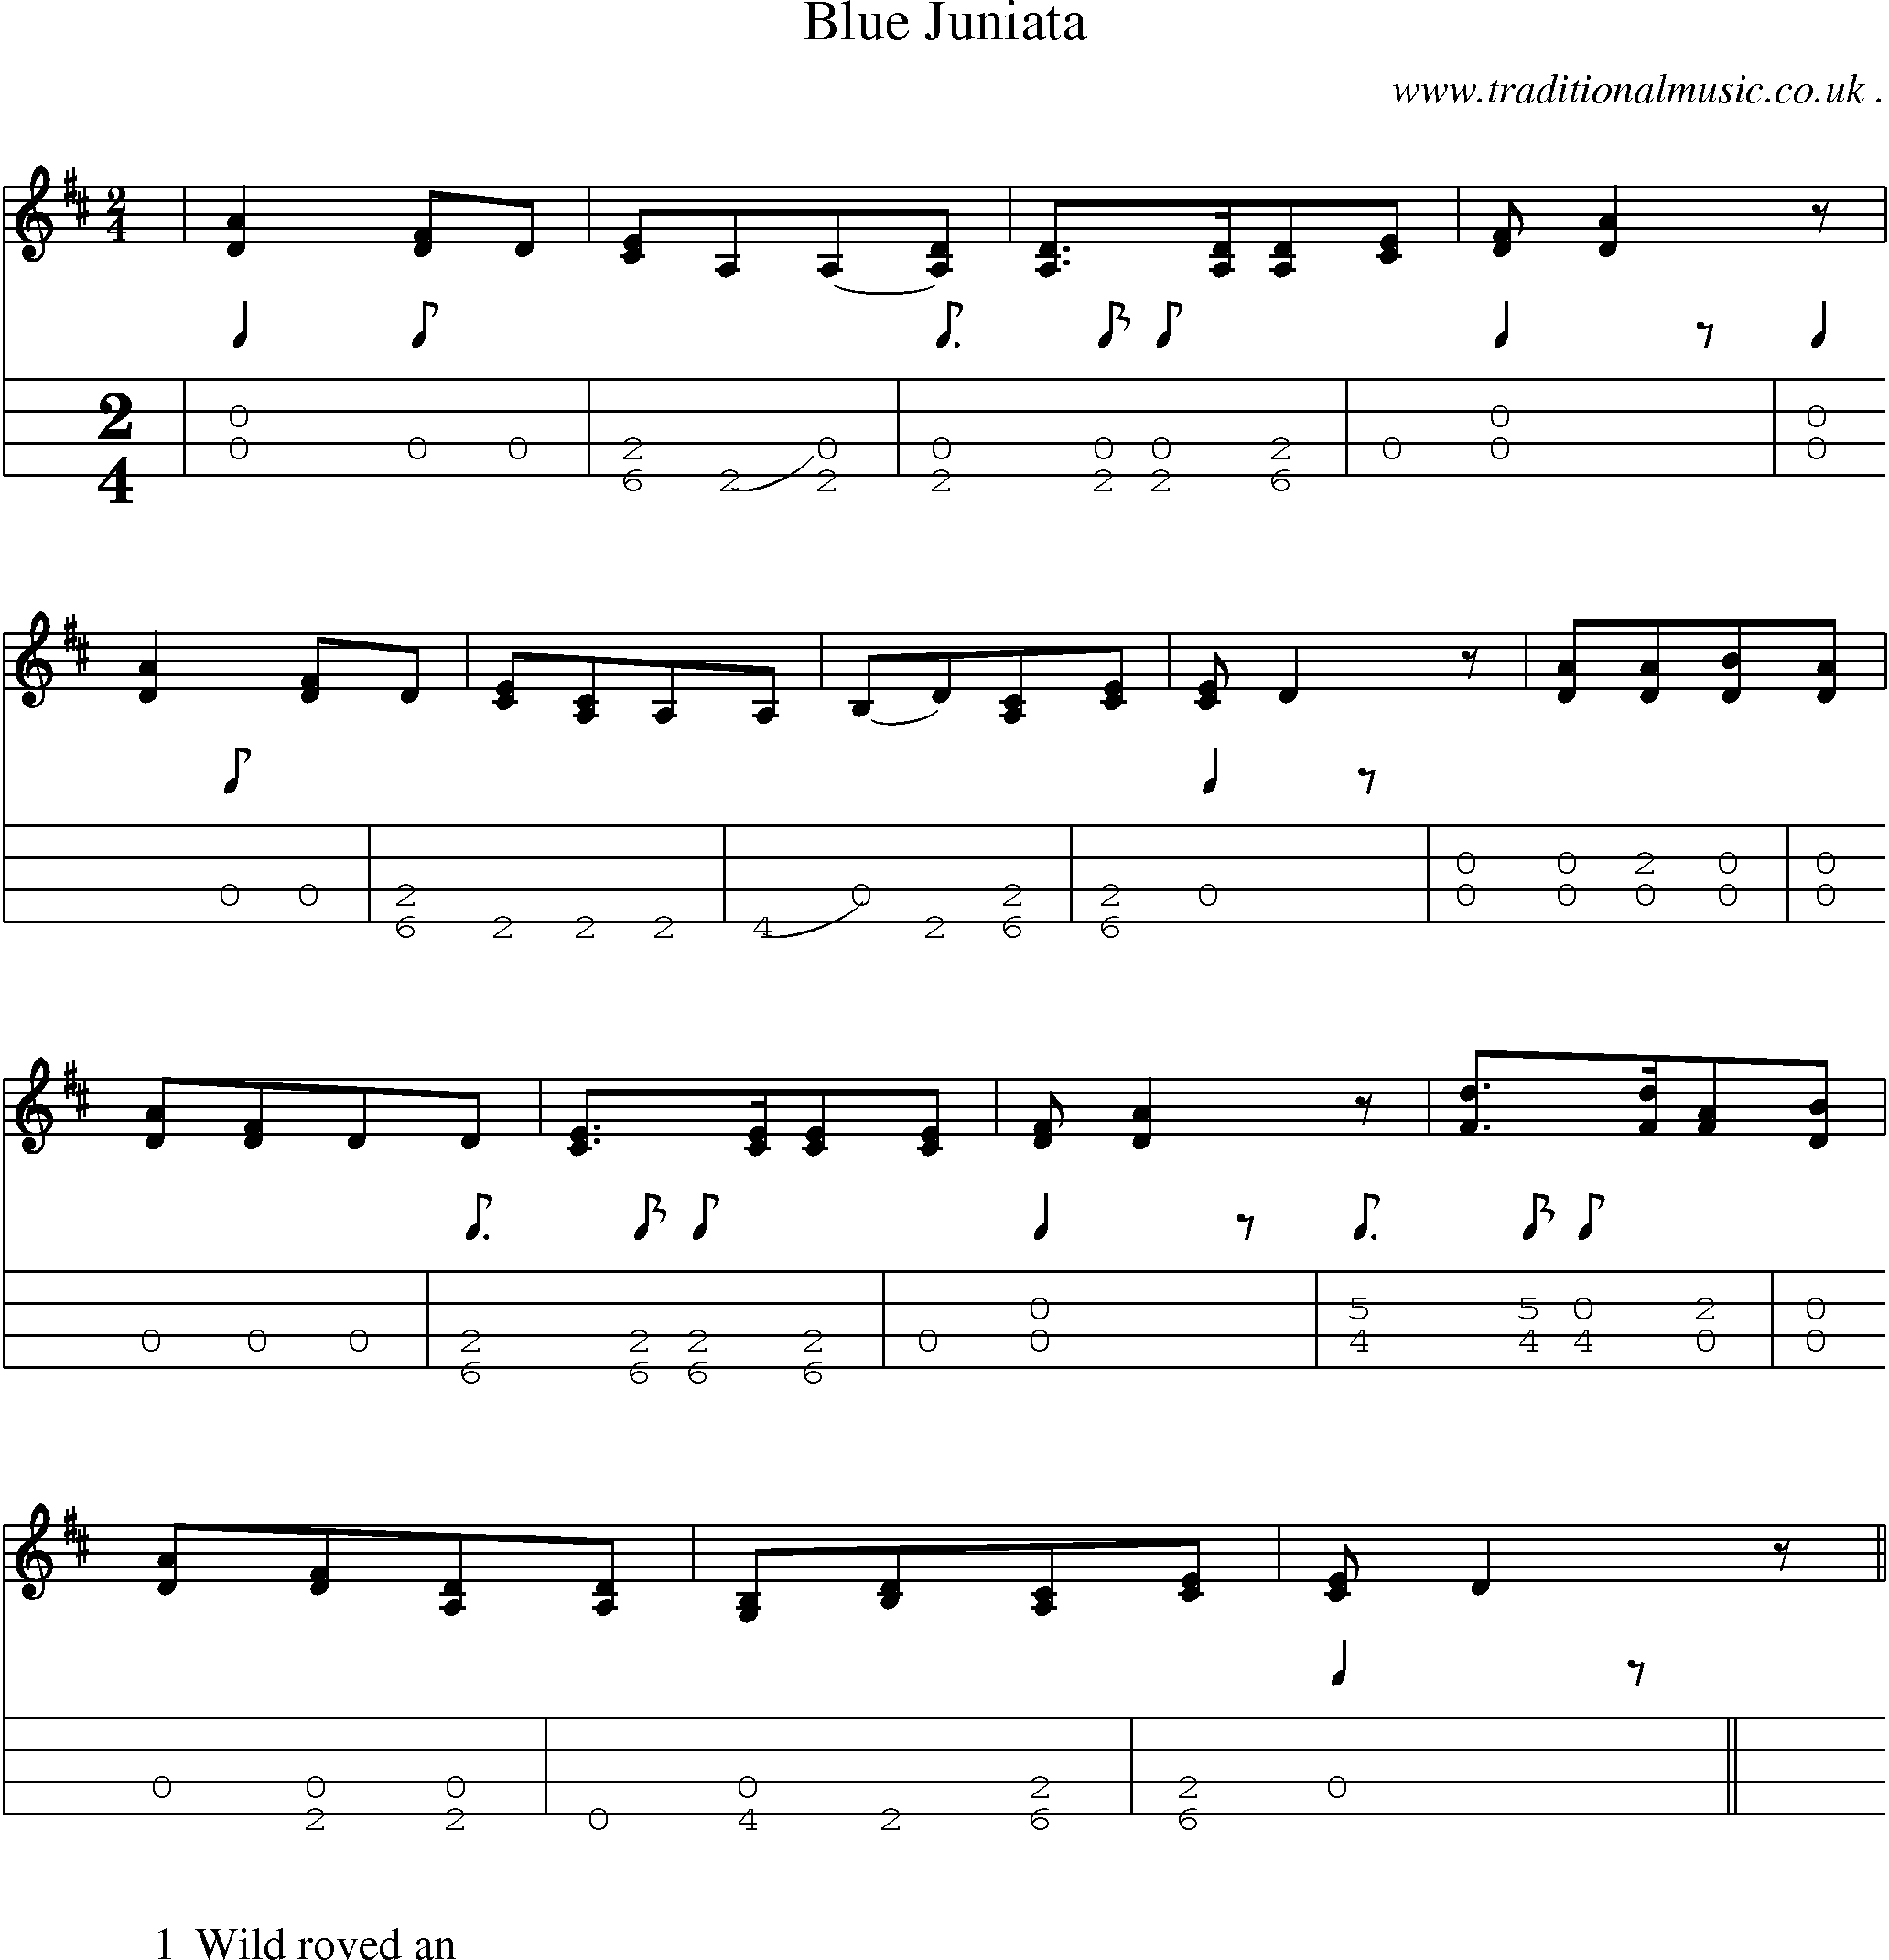 Music Score and Mandolin Tabs for Blue Juniata